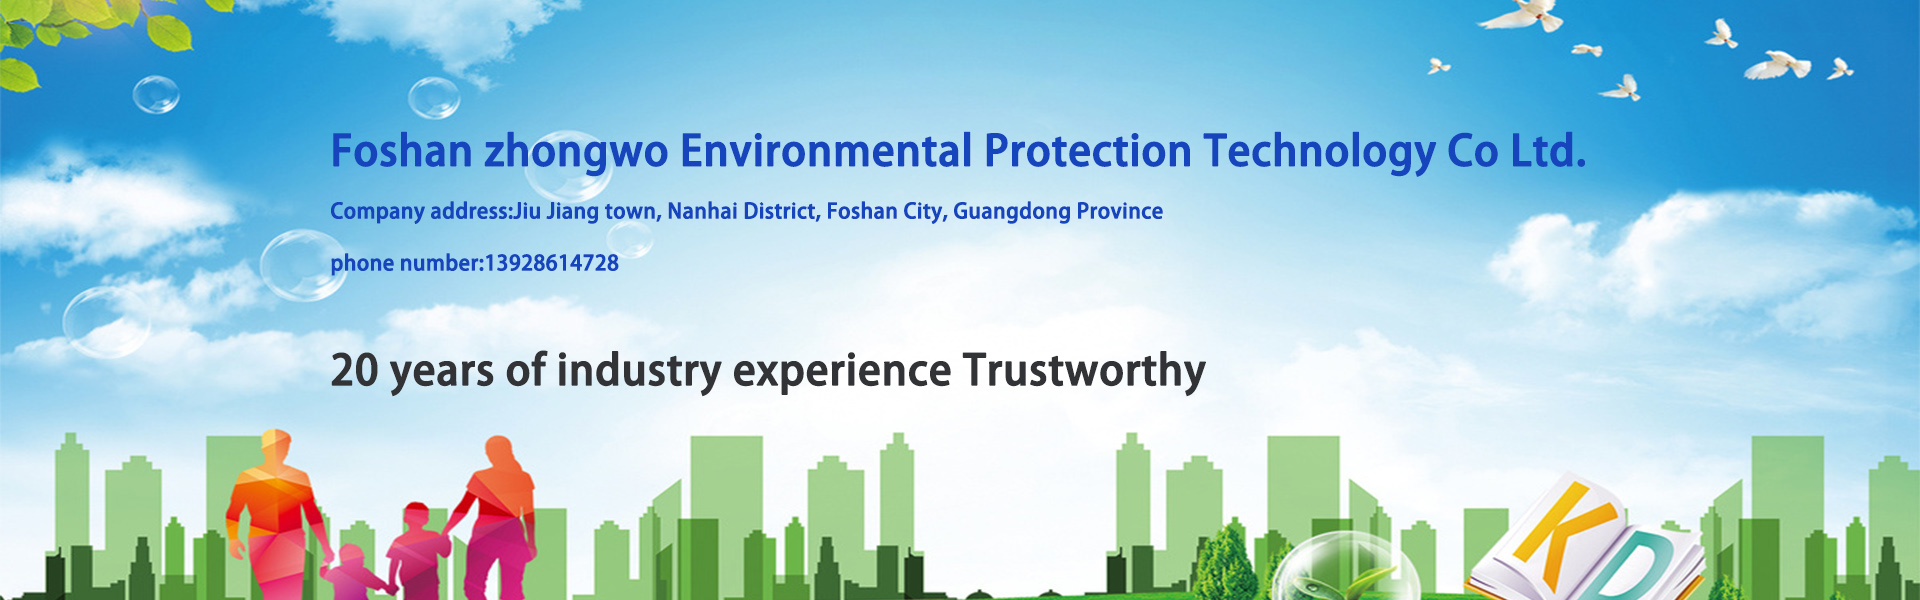 waterbehandeling apparatuur, waterzuivering apparatuur, milieubescherming apparatuur,Foshan zhongwo Environmental Protection Technology Co Ltd.